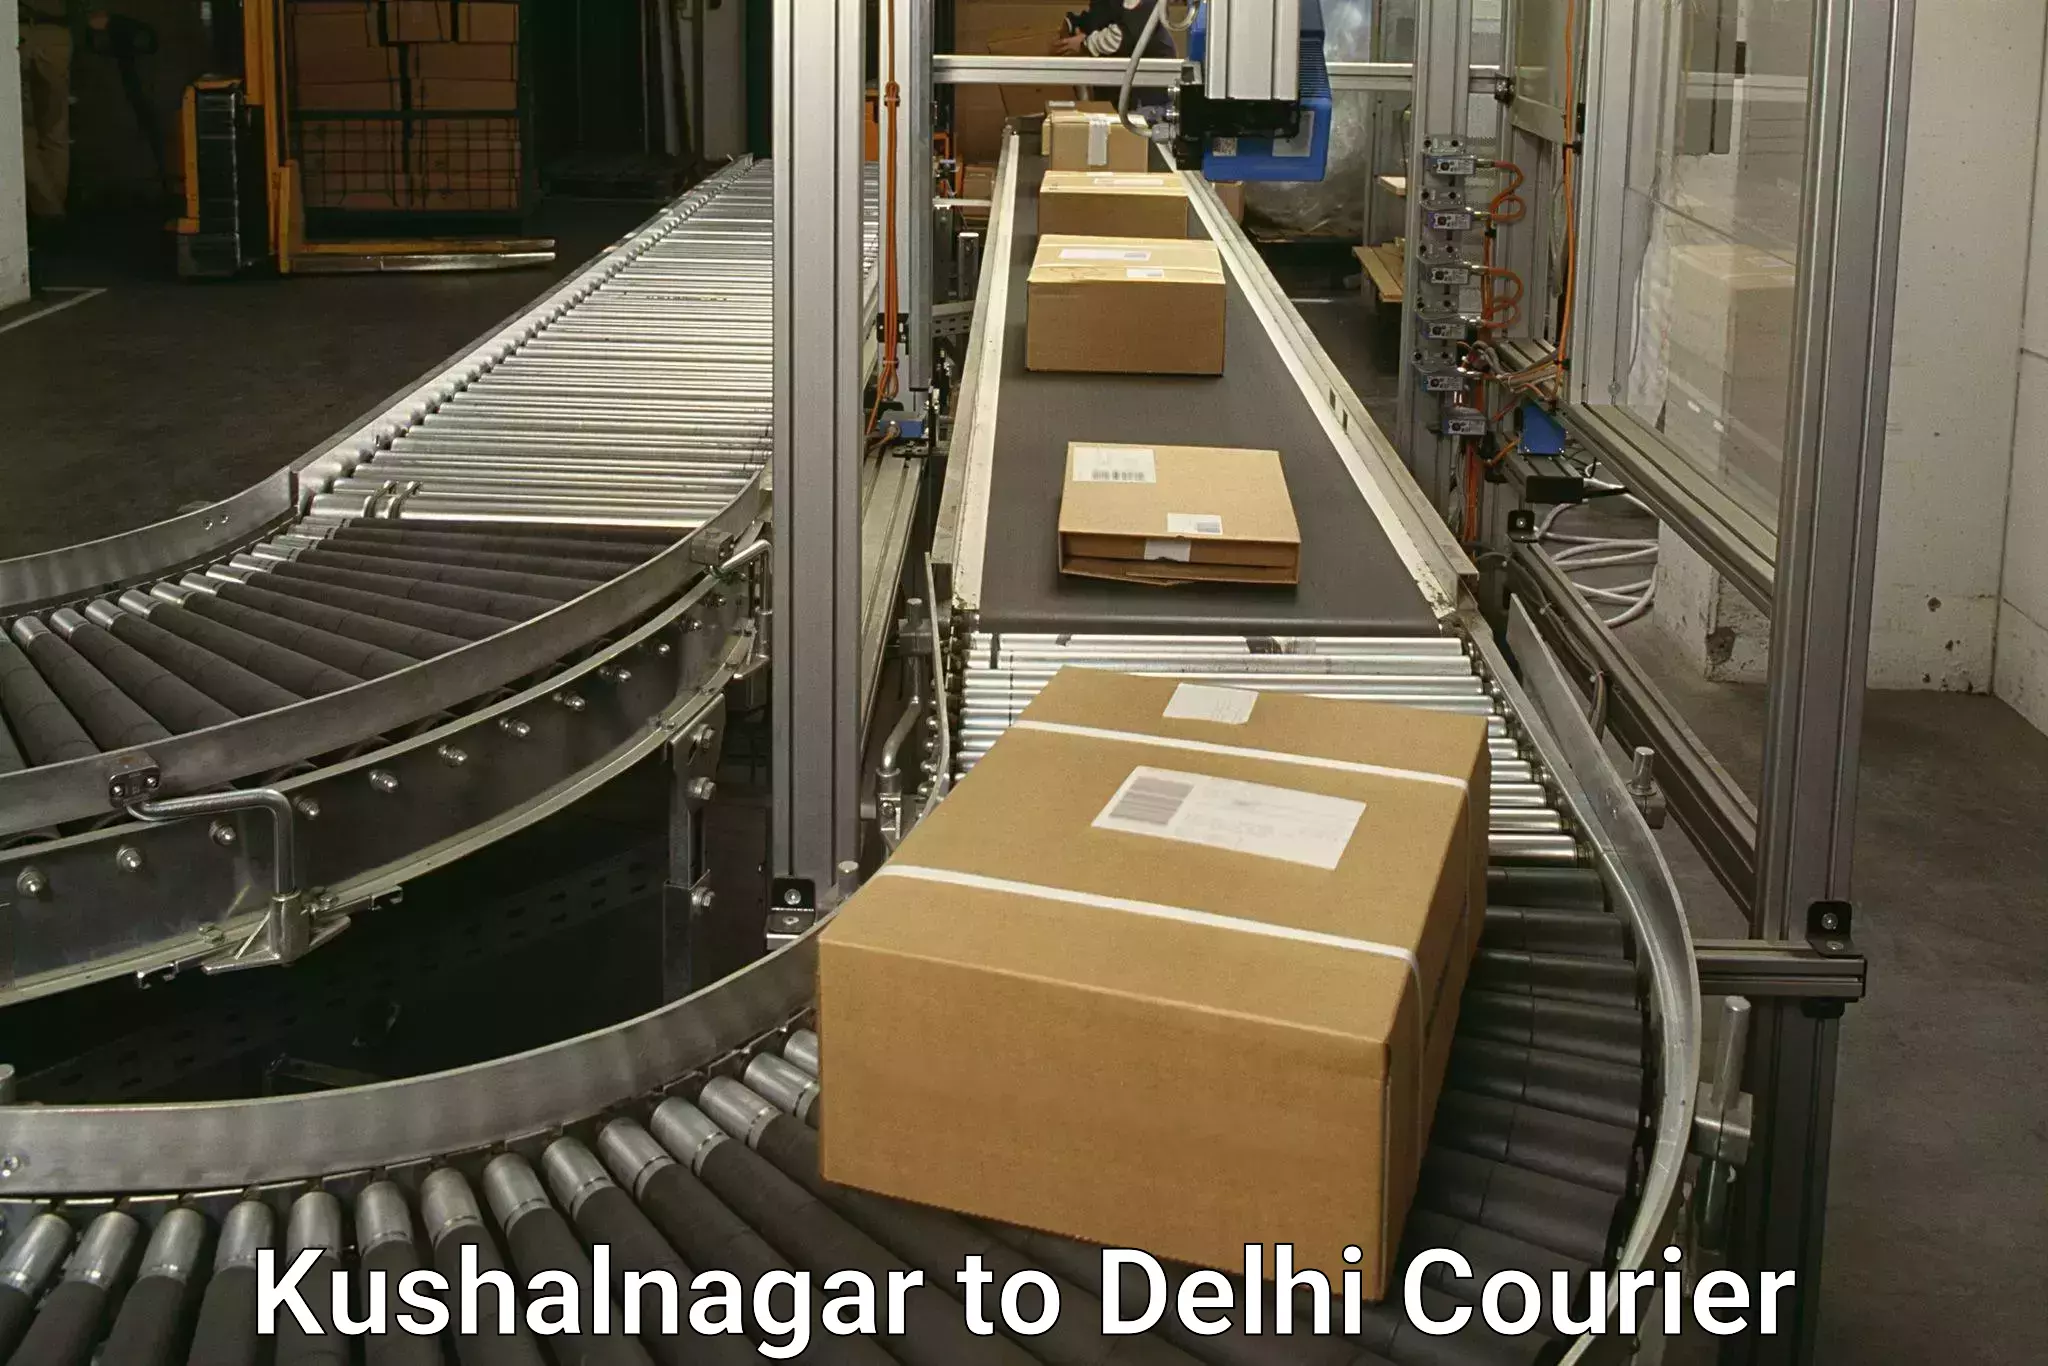 Courier service comparison Kushalnagar to NCR